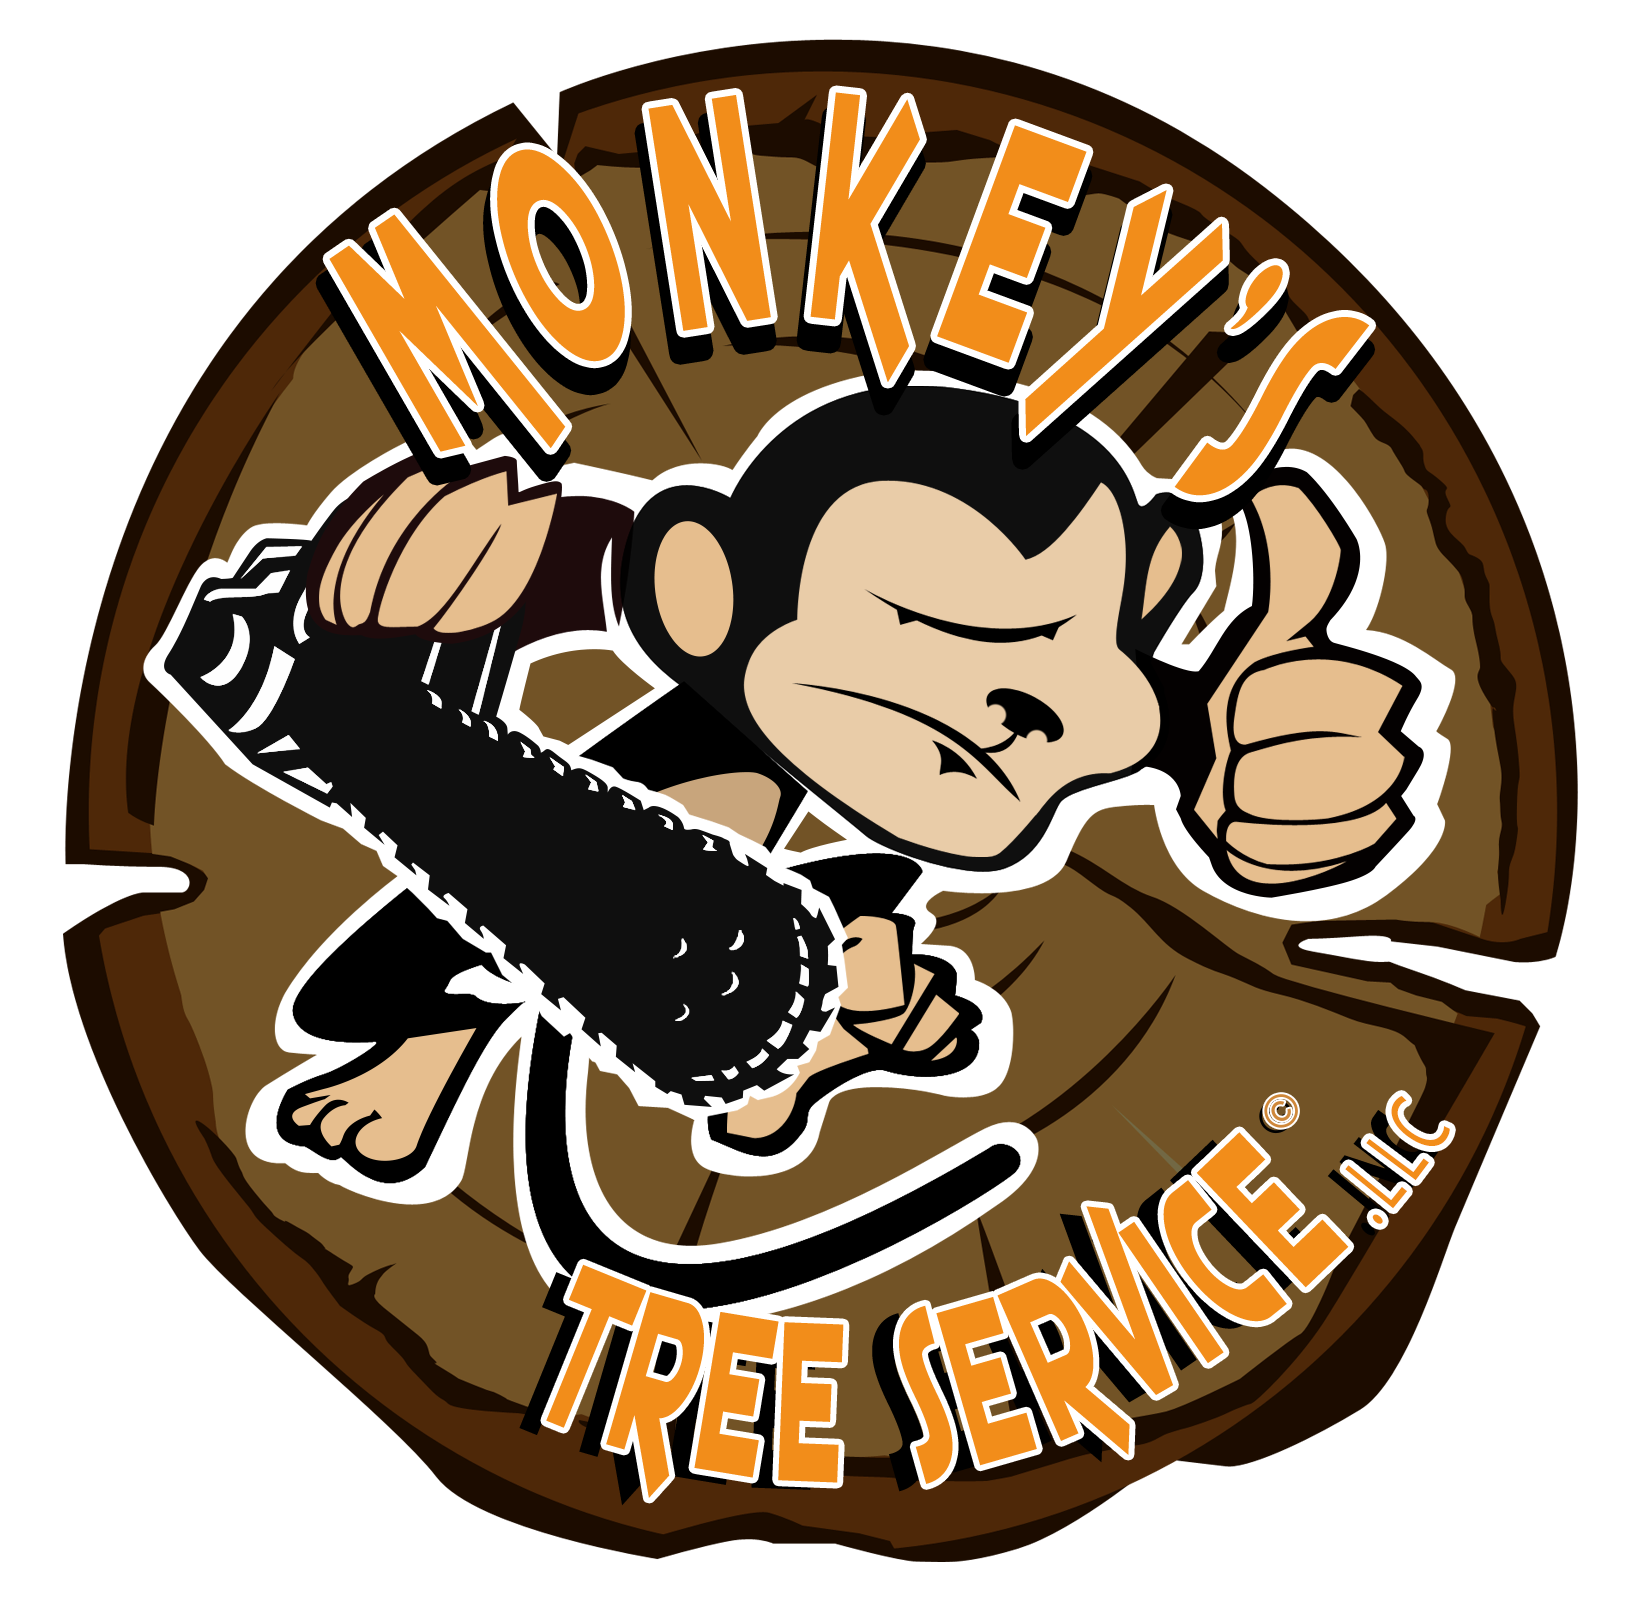 Monkeys Tree Service, LLC Logo